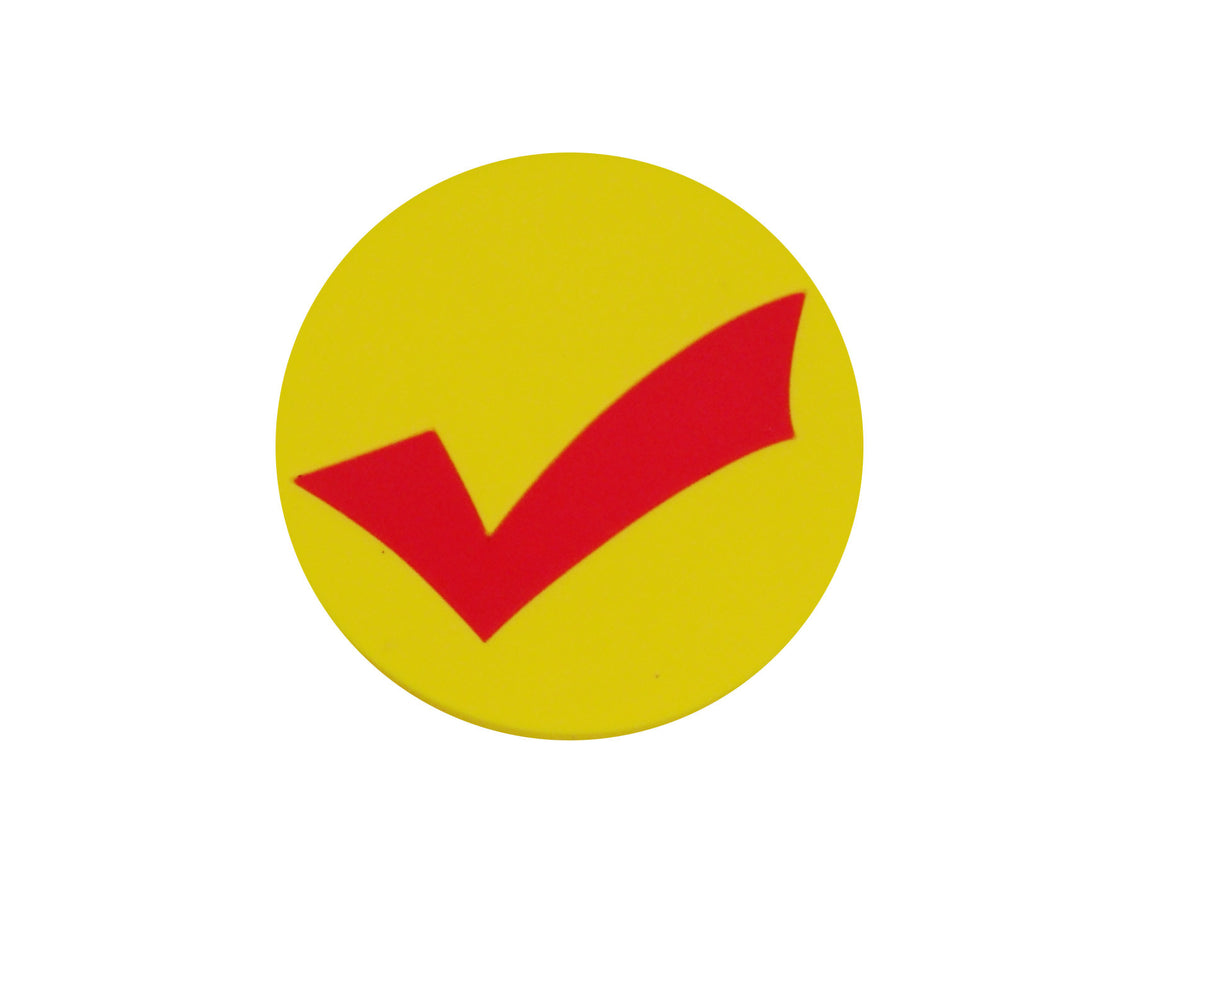 yellow check mark